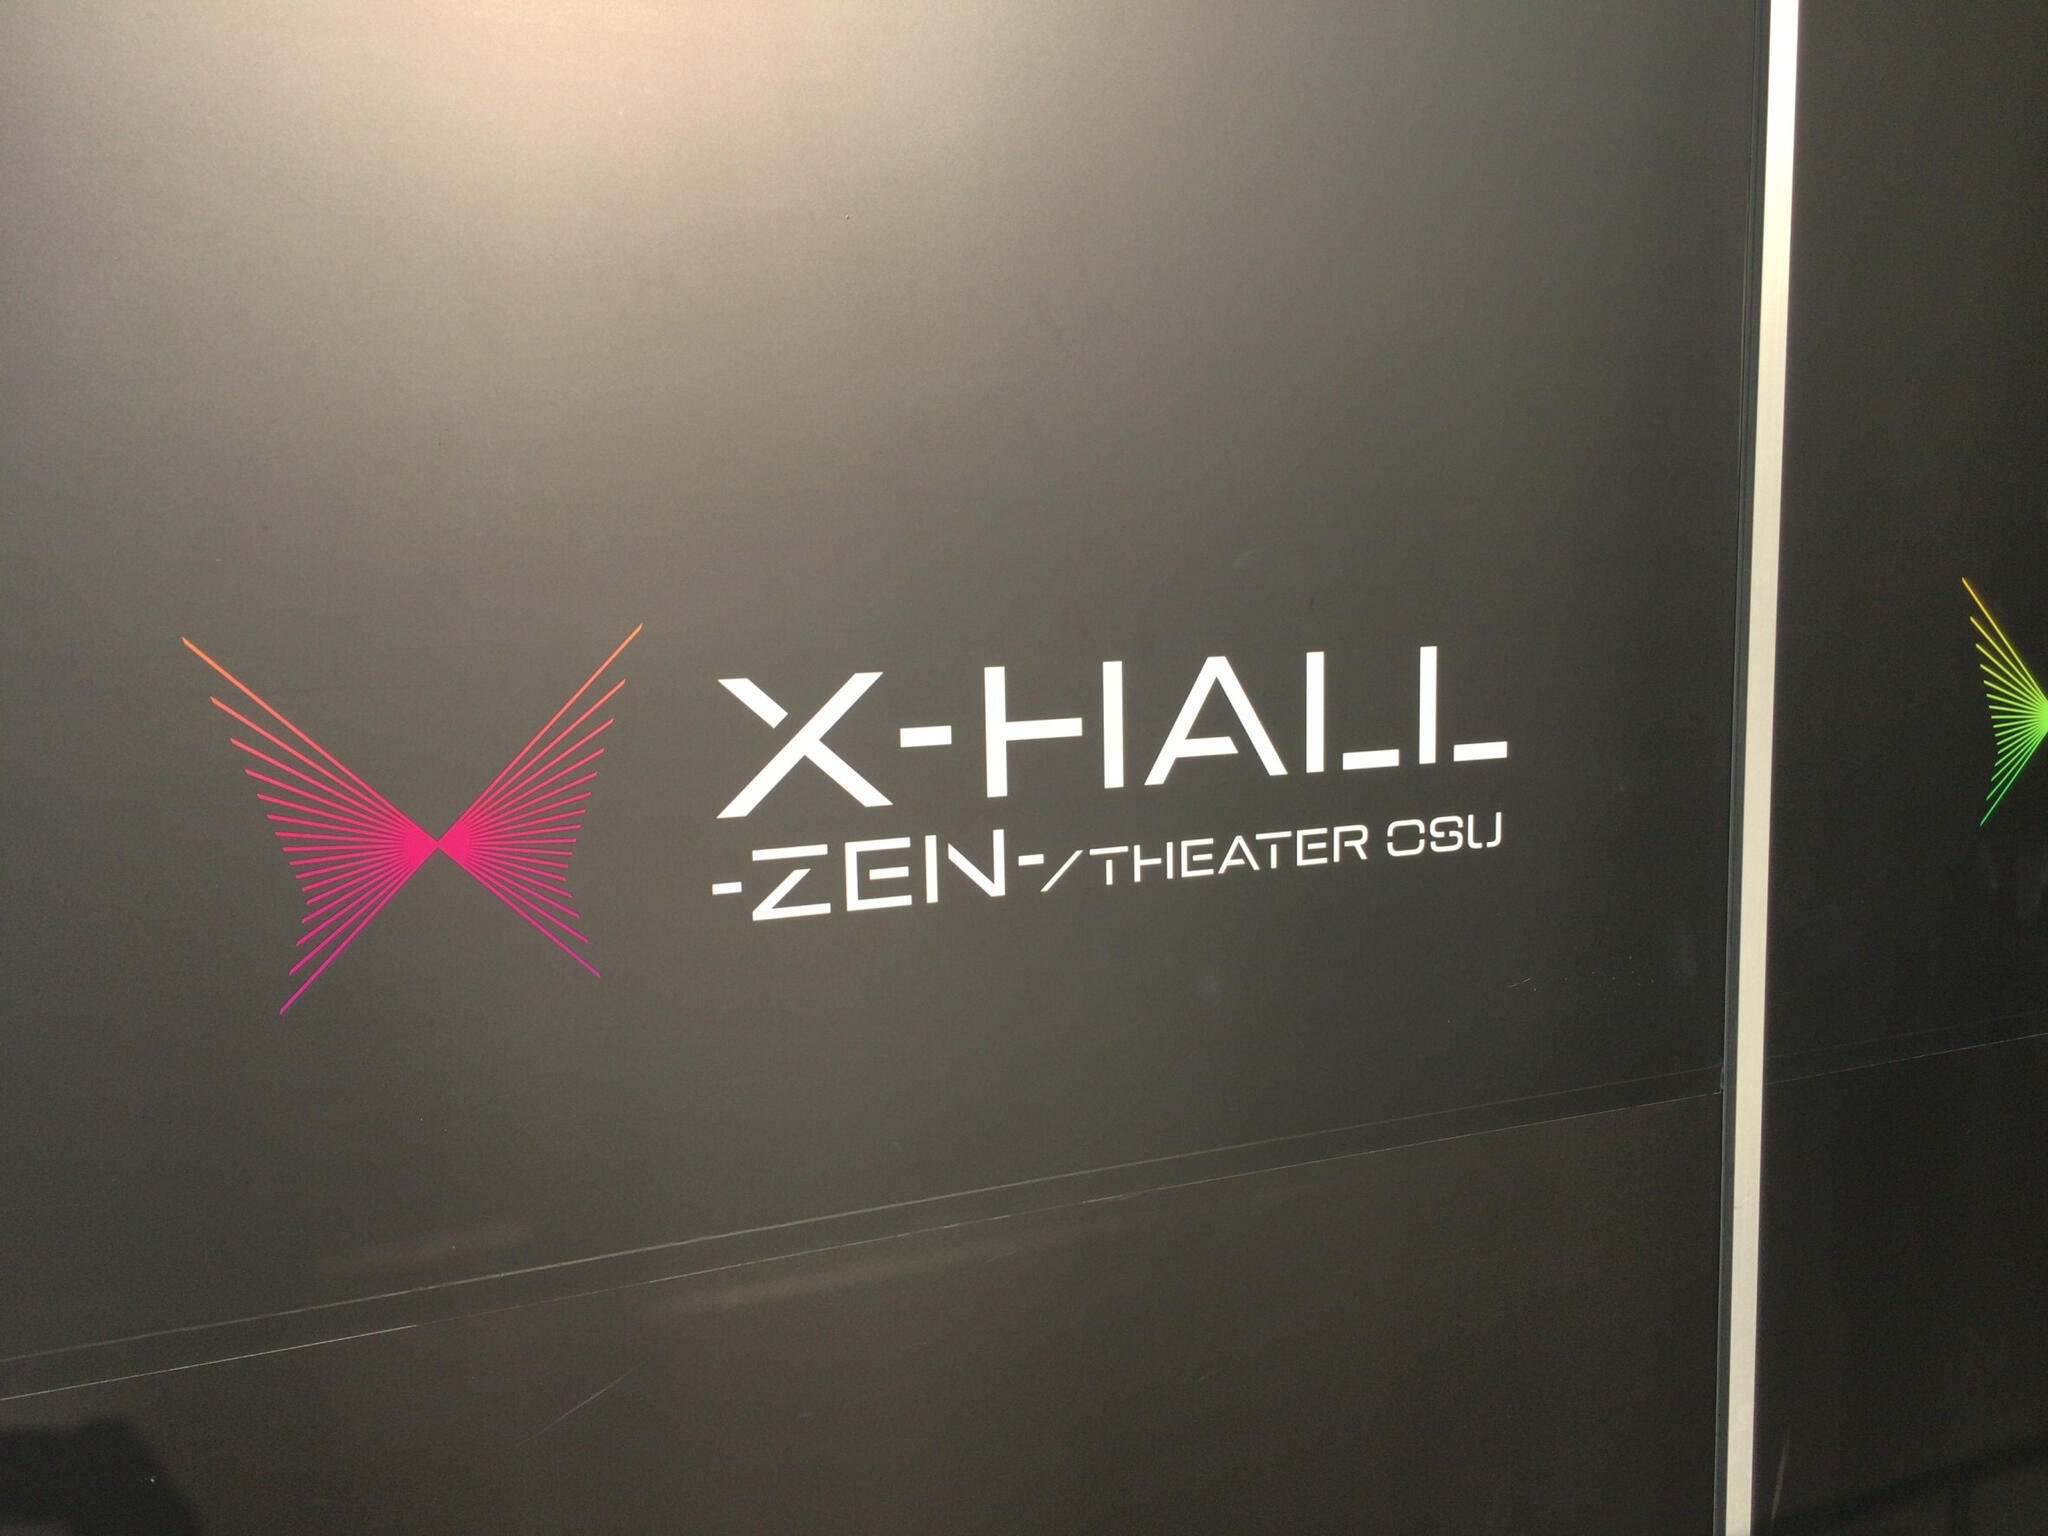 X・HALL・ZEN・THEATEROSUの代表写真1